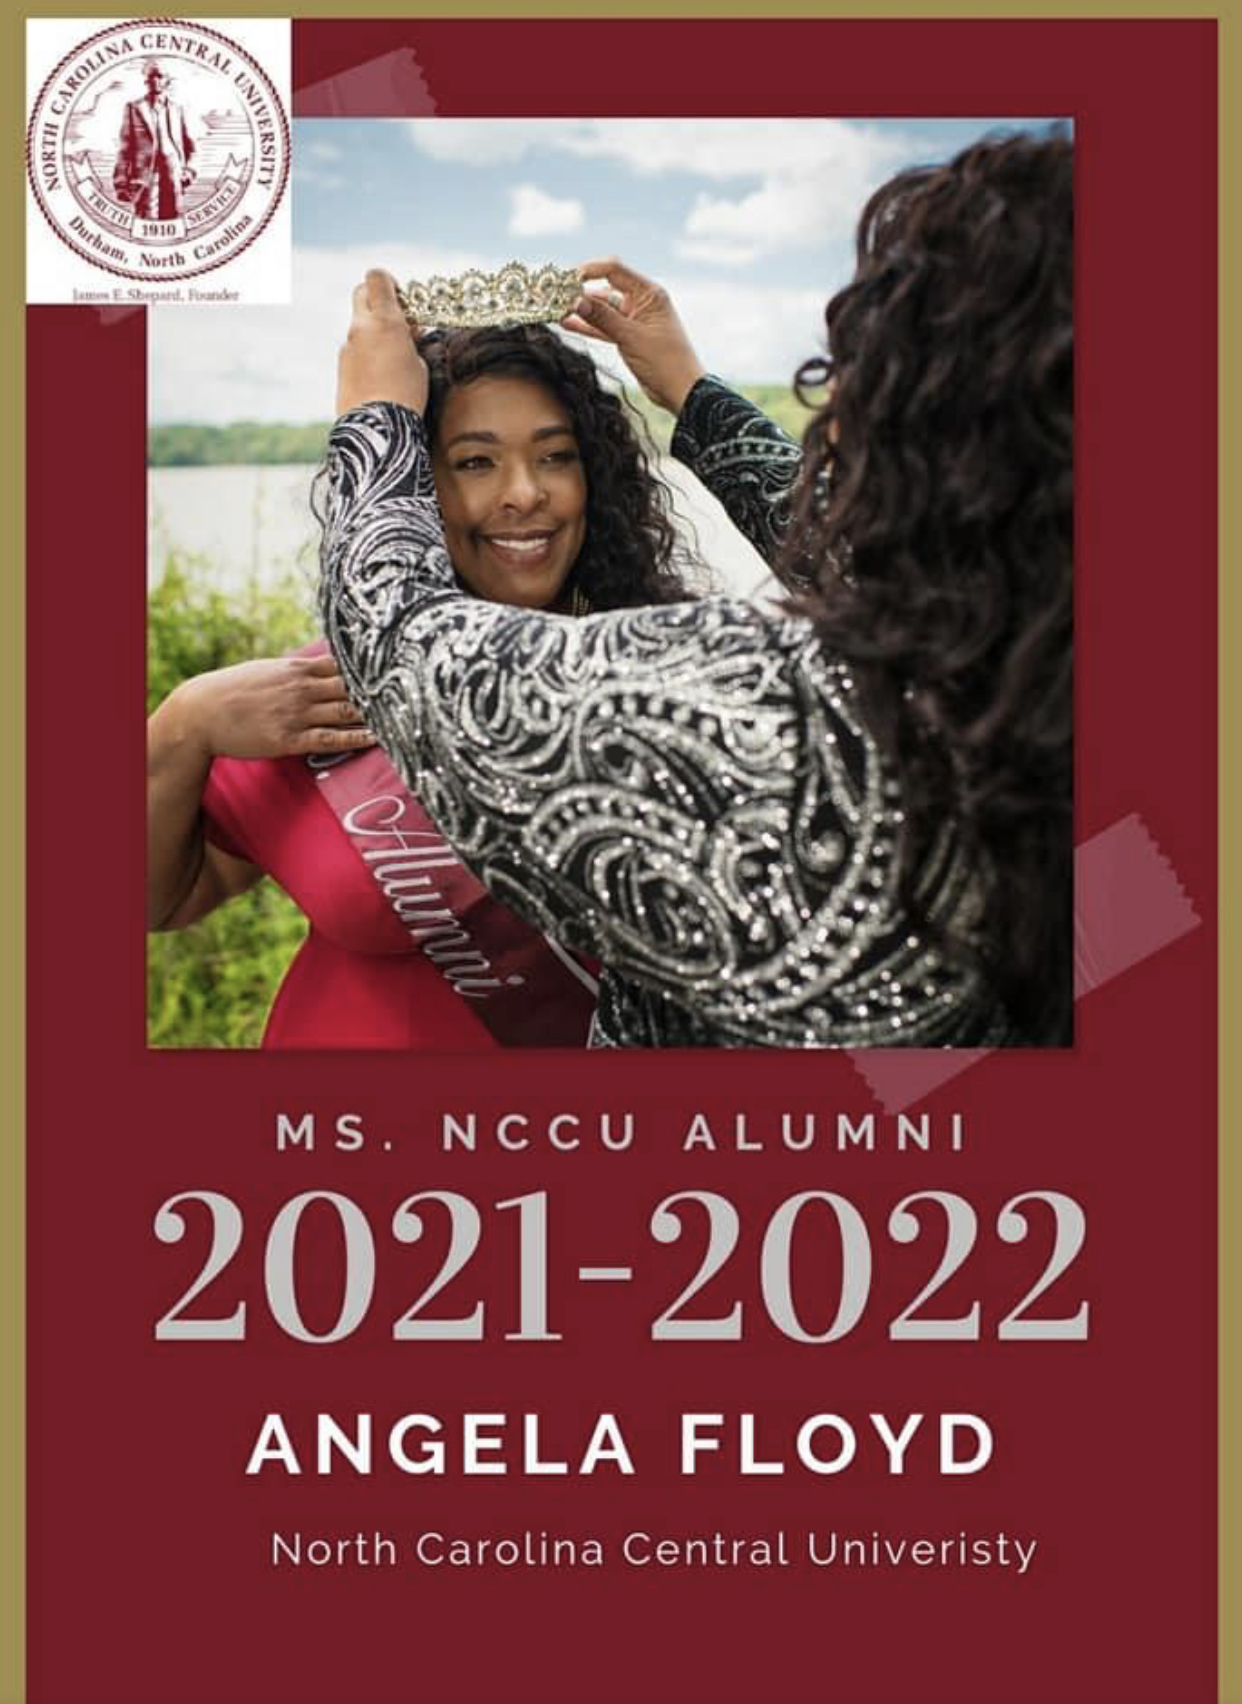 Mrs. Alumni Angela Floyd Crowned Ms. NCCU Alumni 2021-2022